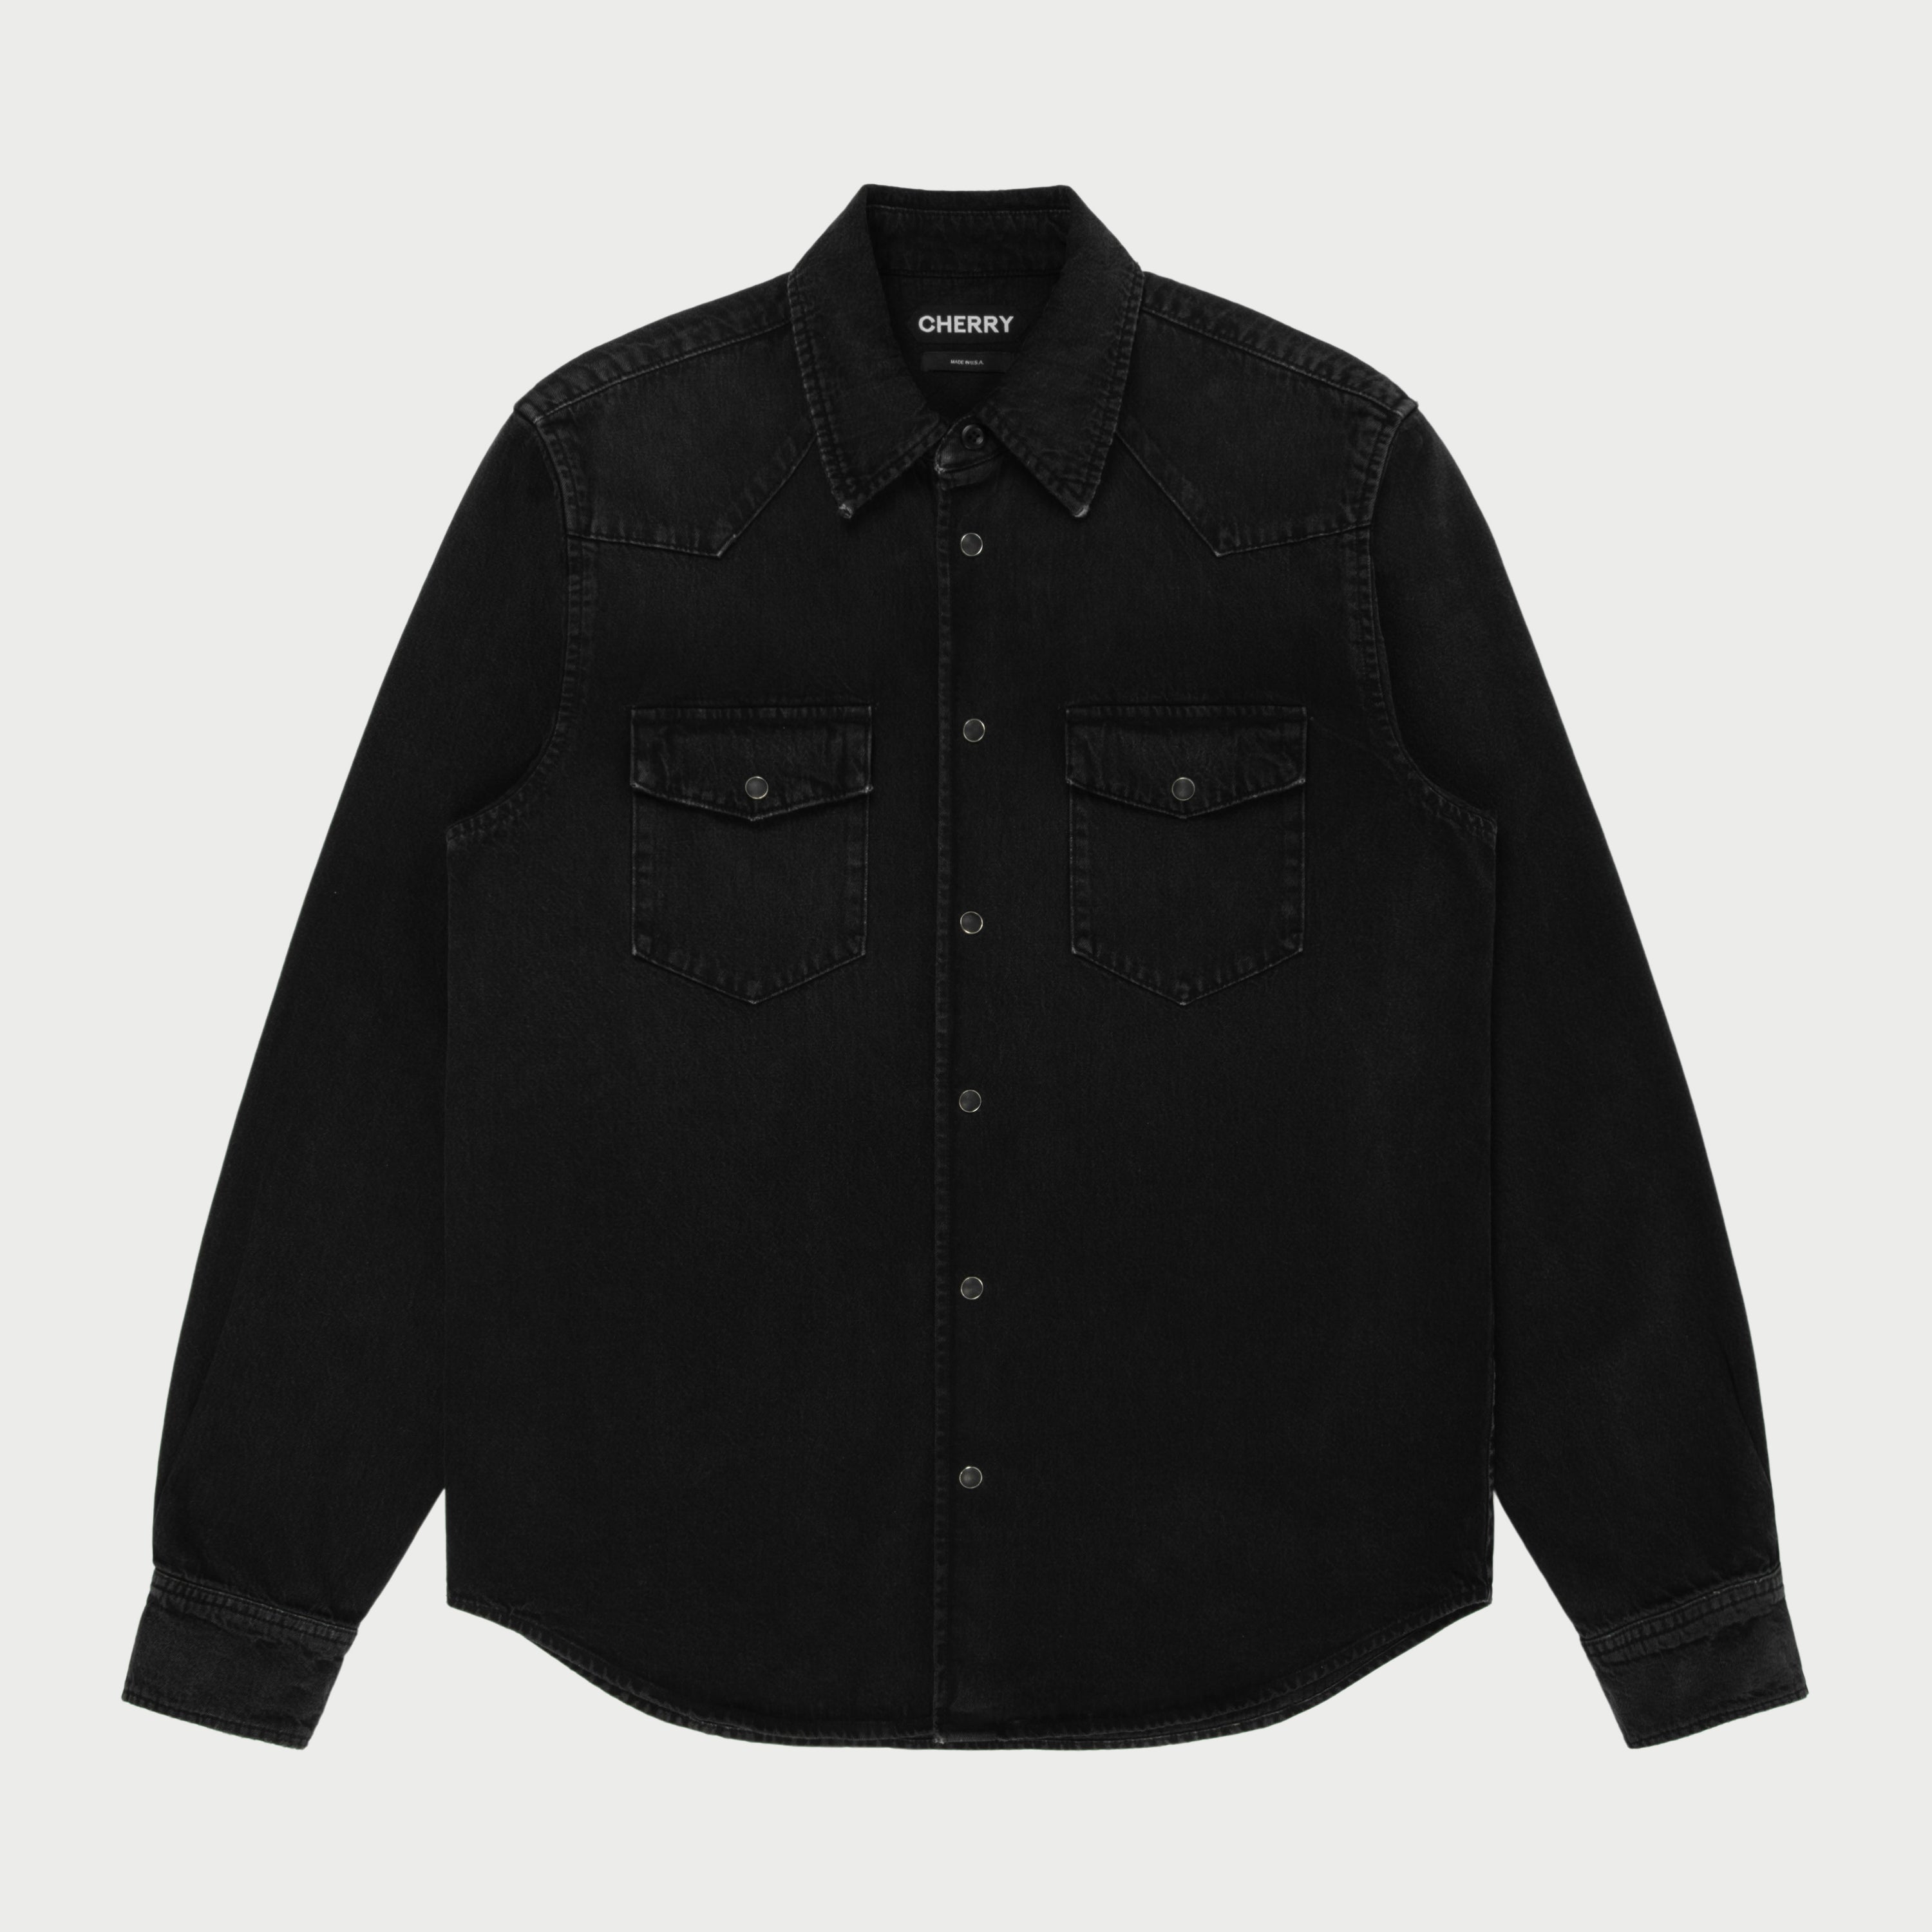 Western Snap Shirt (Black)